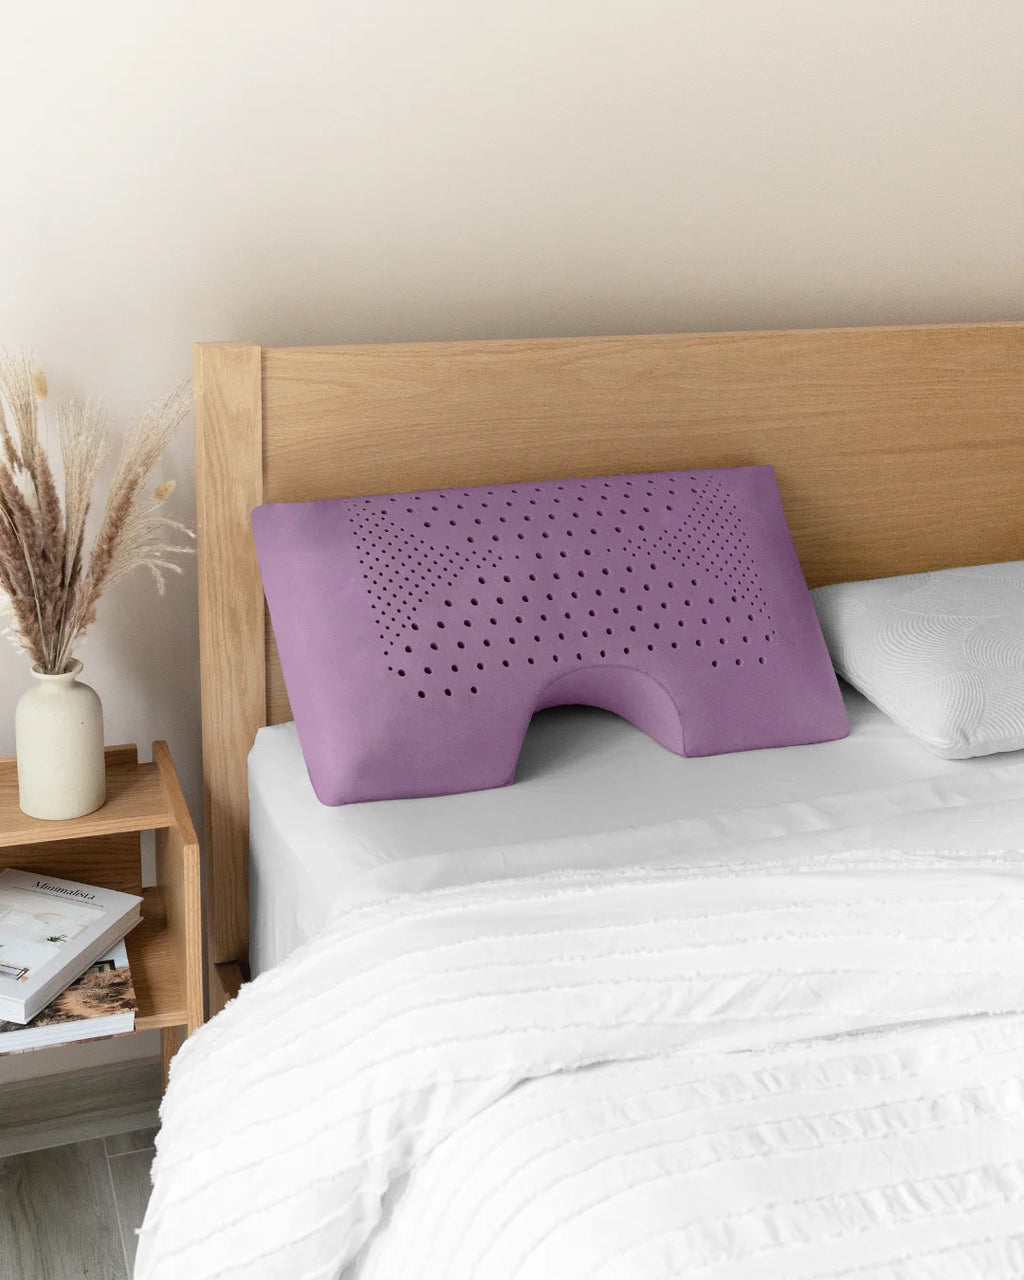 Cómo lavar una almohada para mantener su aroma fresco - Consumer Reports